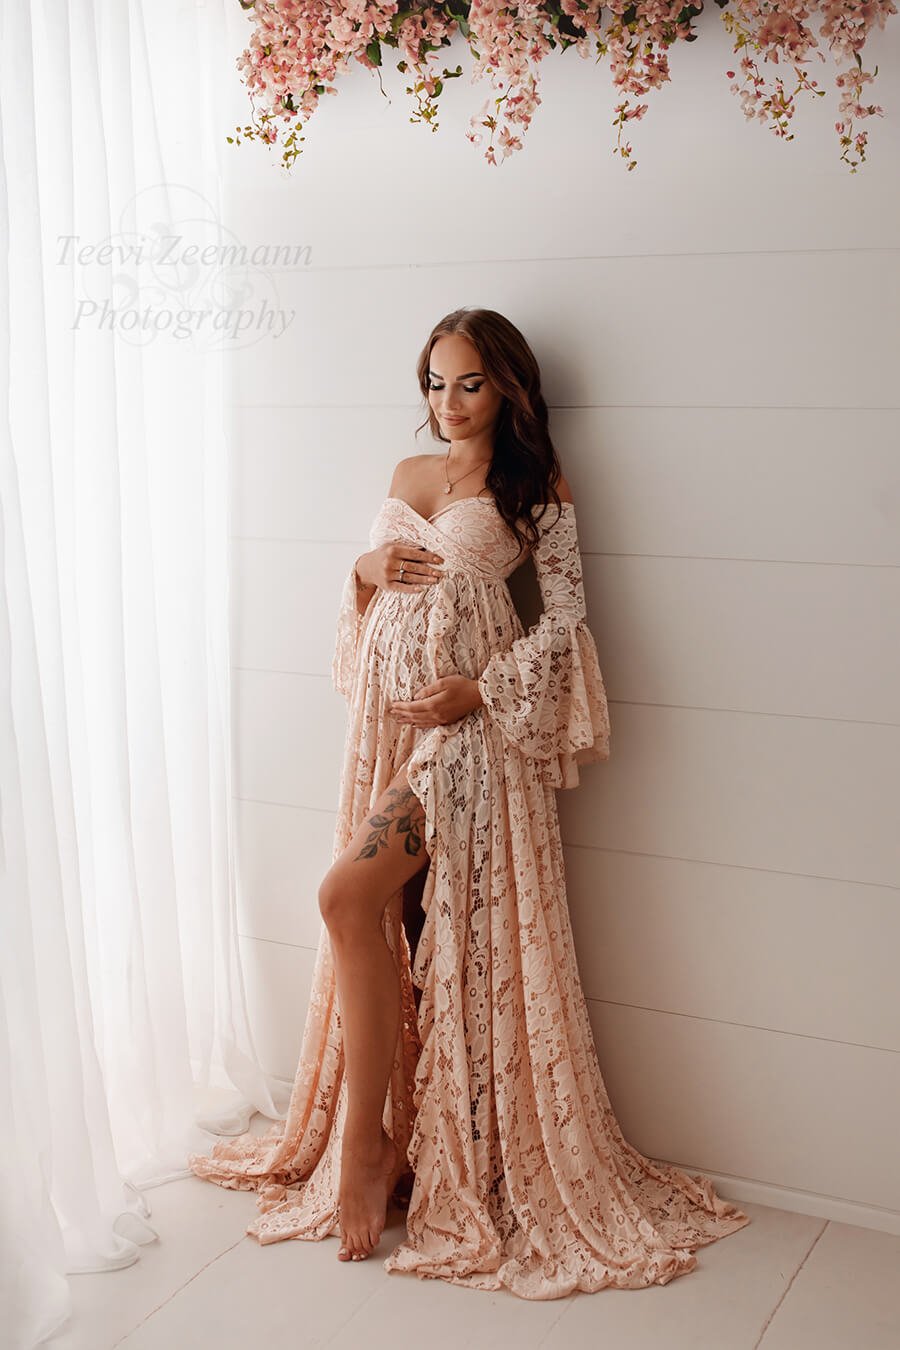 Orchid Dress - Maternity photoshoot dress